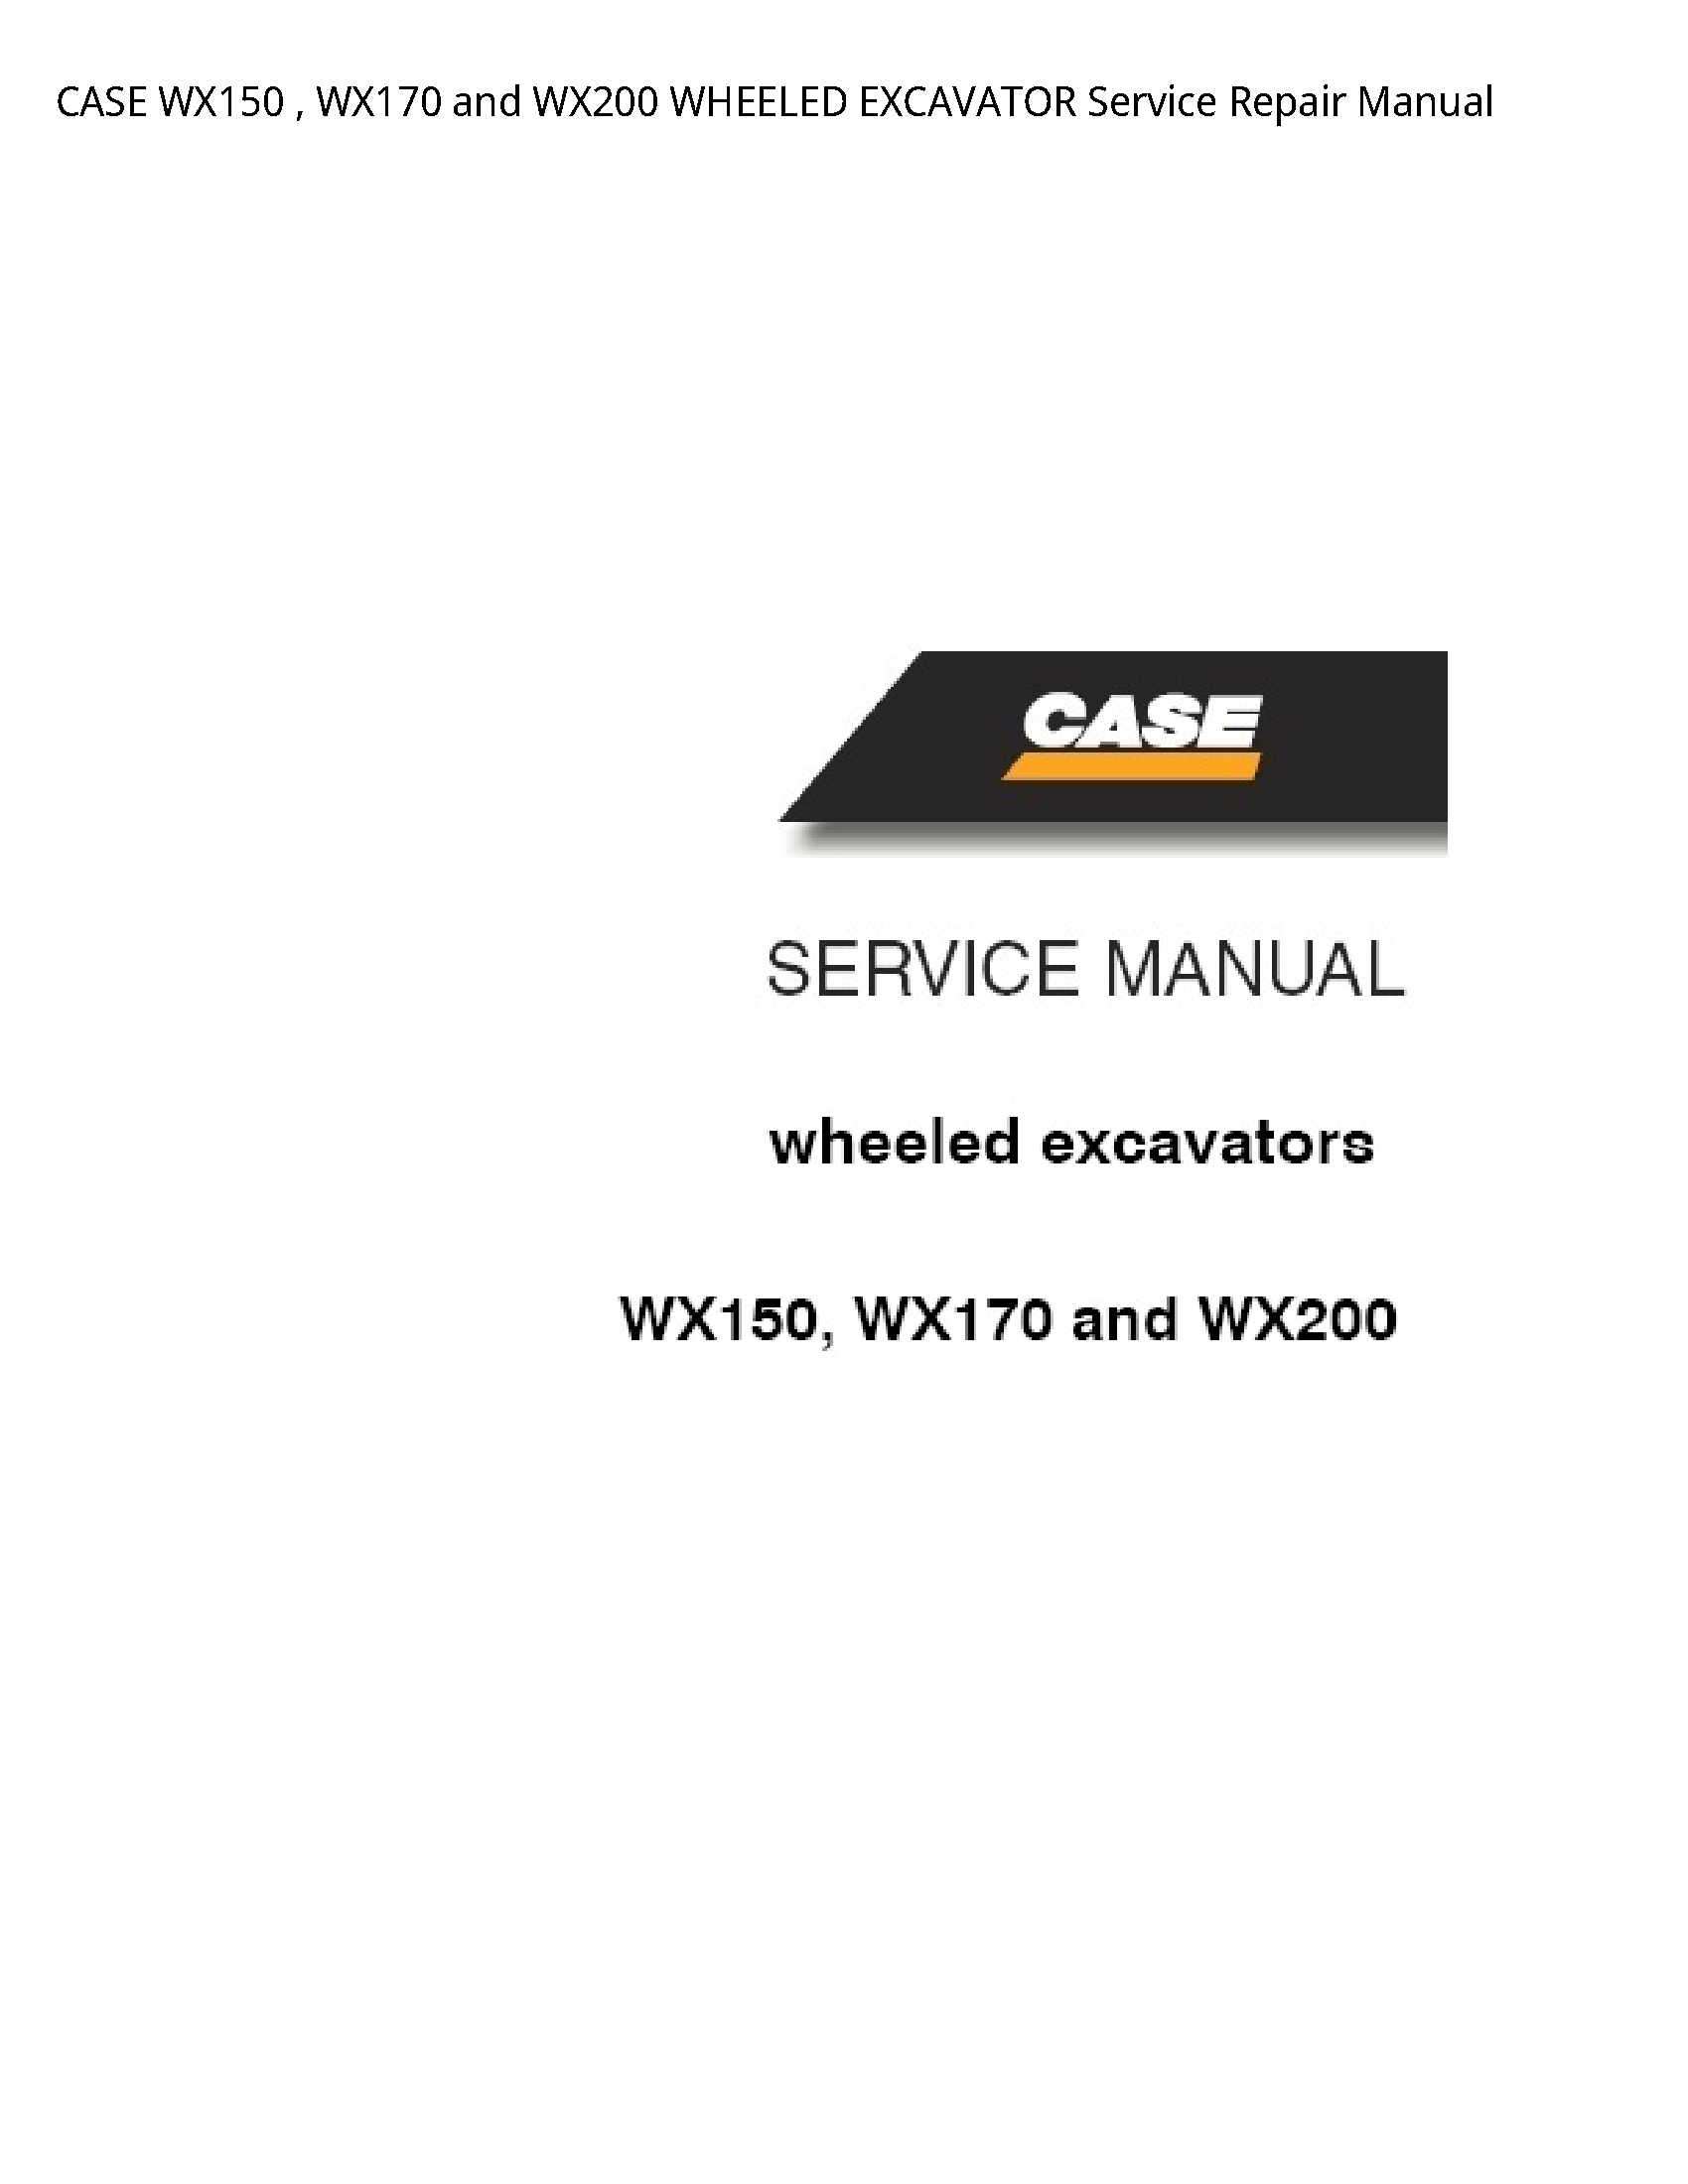 Case/Case IH WX150  WHEELED EXCAVATOR manual